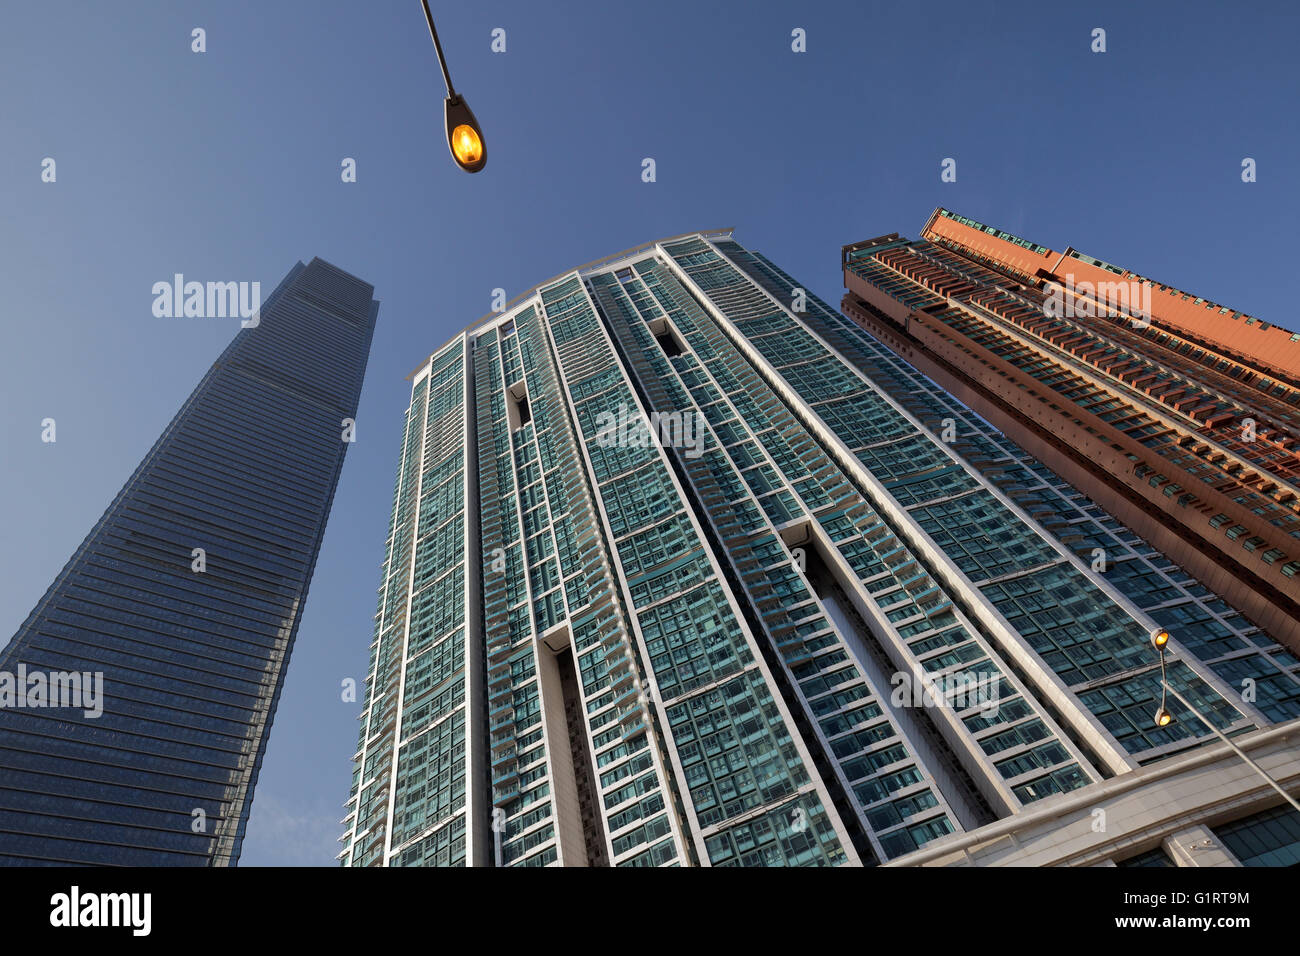 Gratte-ciel International commerce center, CPI, le Harbourside Wohnhochhaus, Union Square, West Kowloon, Hong Kong, Chine Banque D'Images